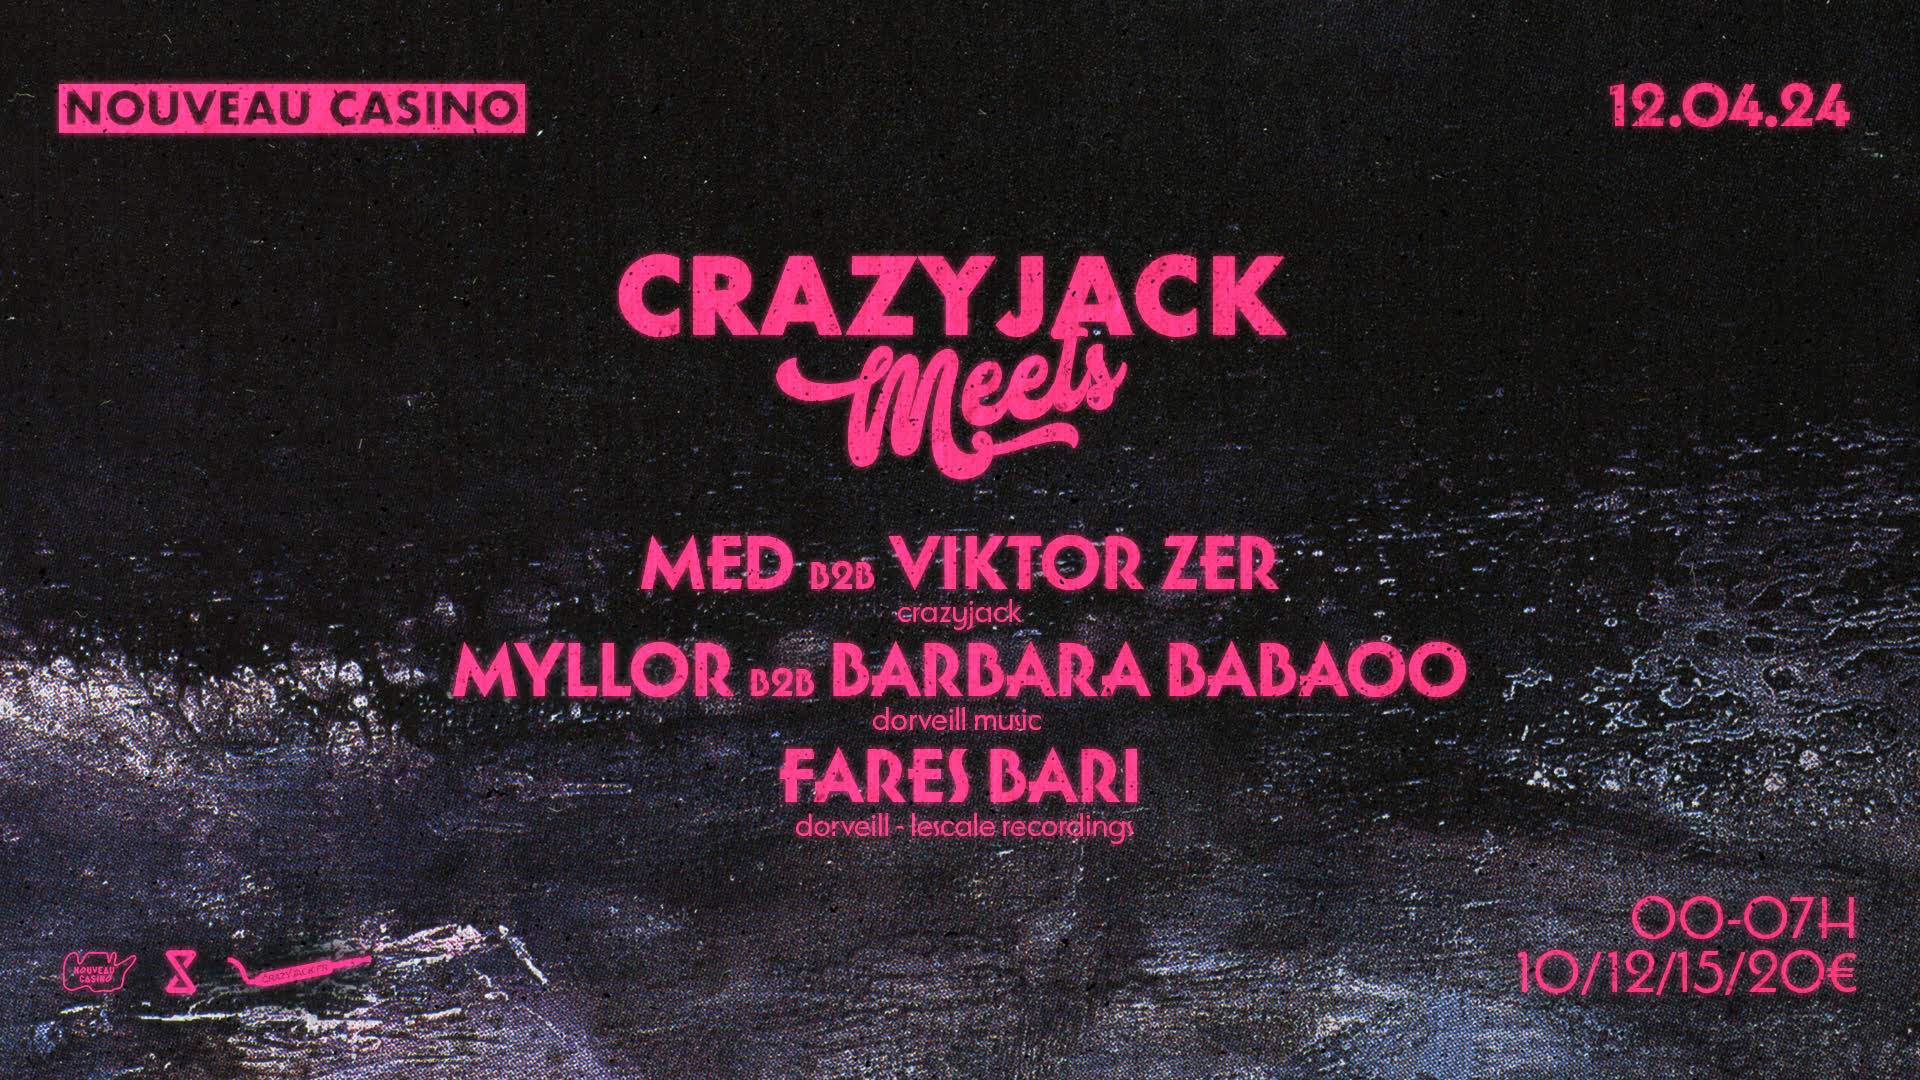 CrazyJack meets Med b2b Viktor Zer, Myllor b2b Barbara Babaoo, Fares Bari - フライヤー表